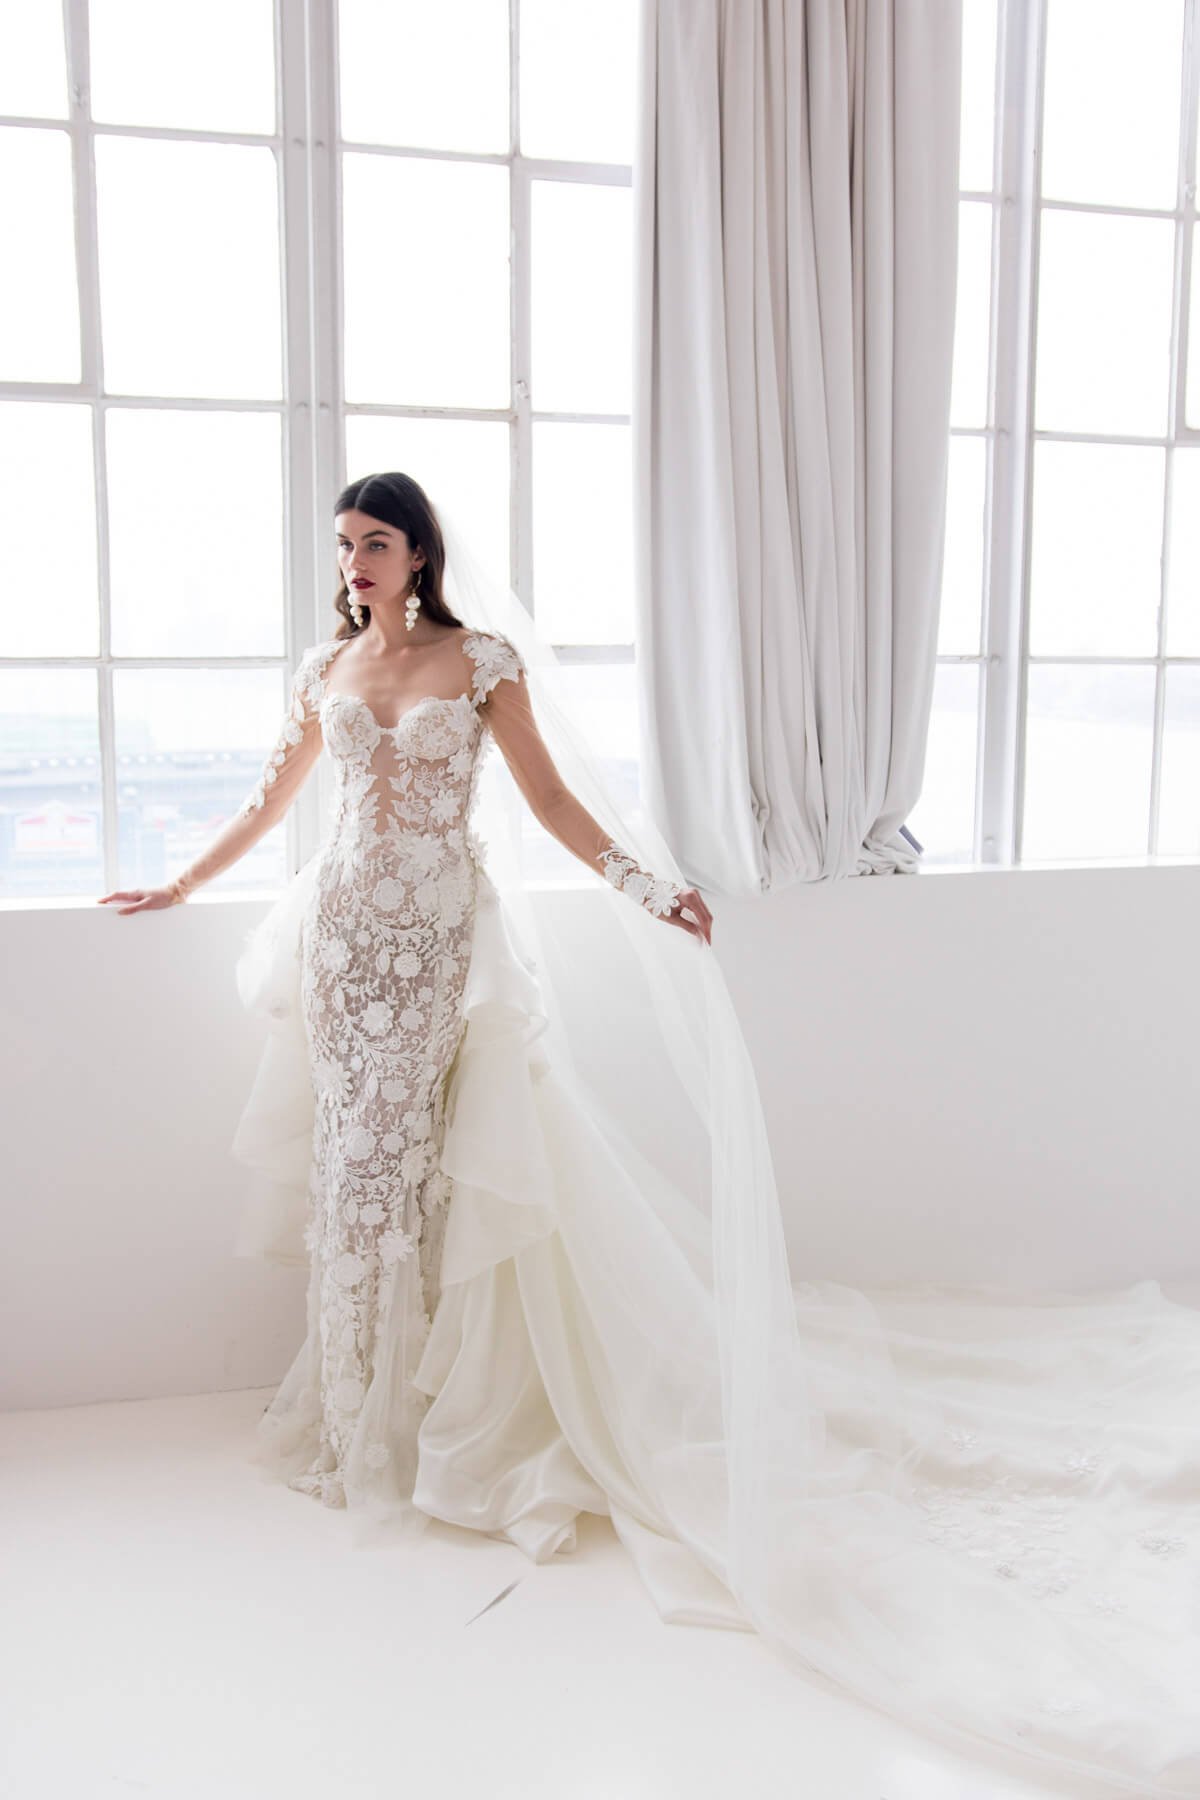 Morgan Newsom Galia Lahav wedding dress designer New York photographer-0667.jpg